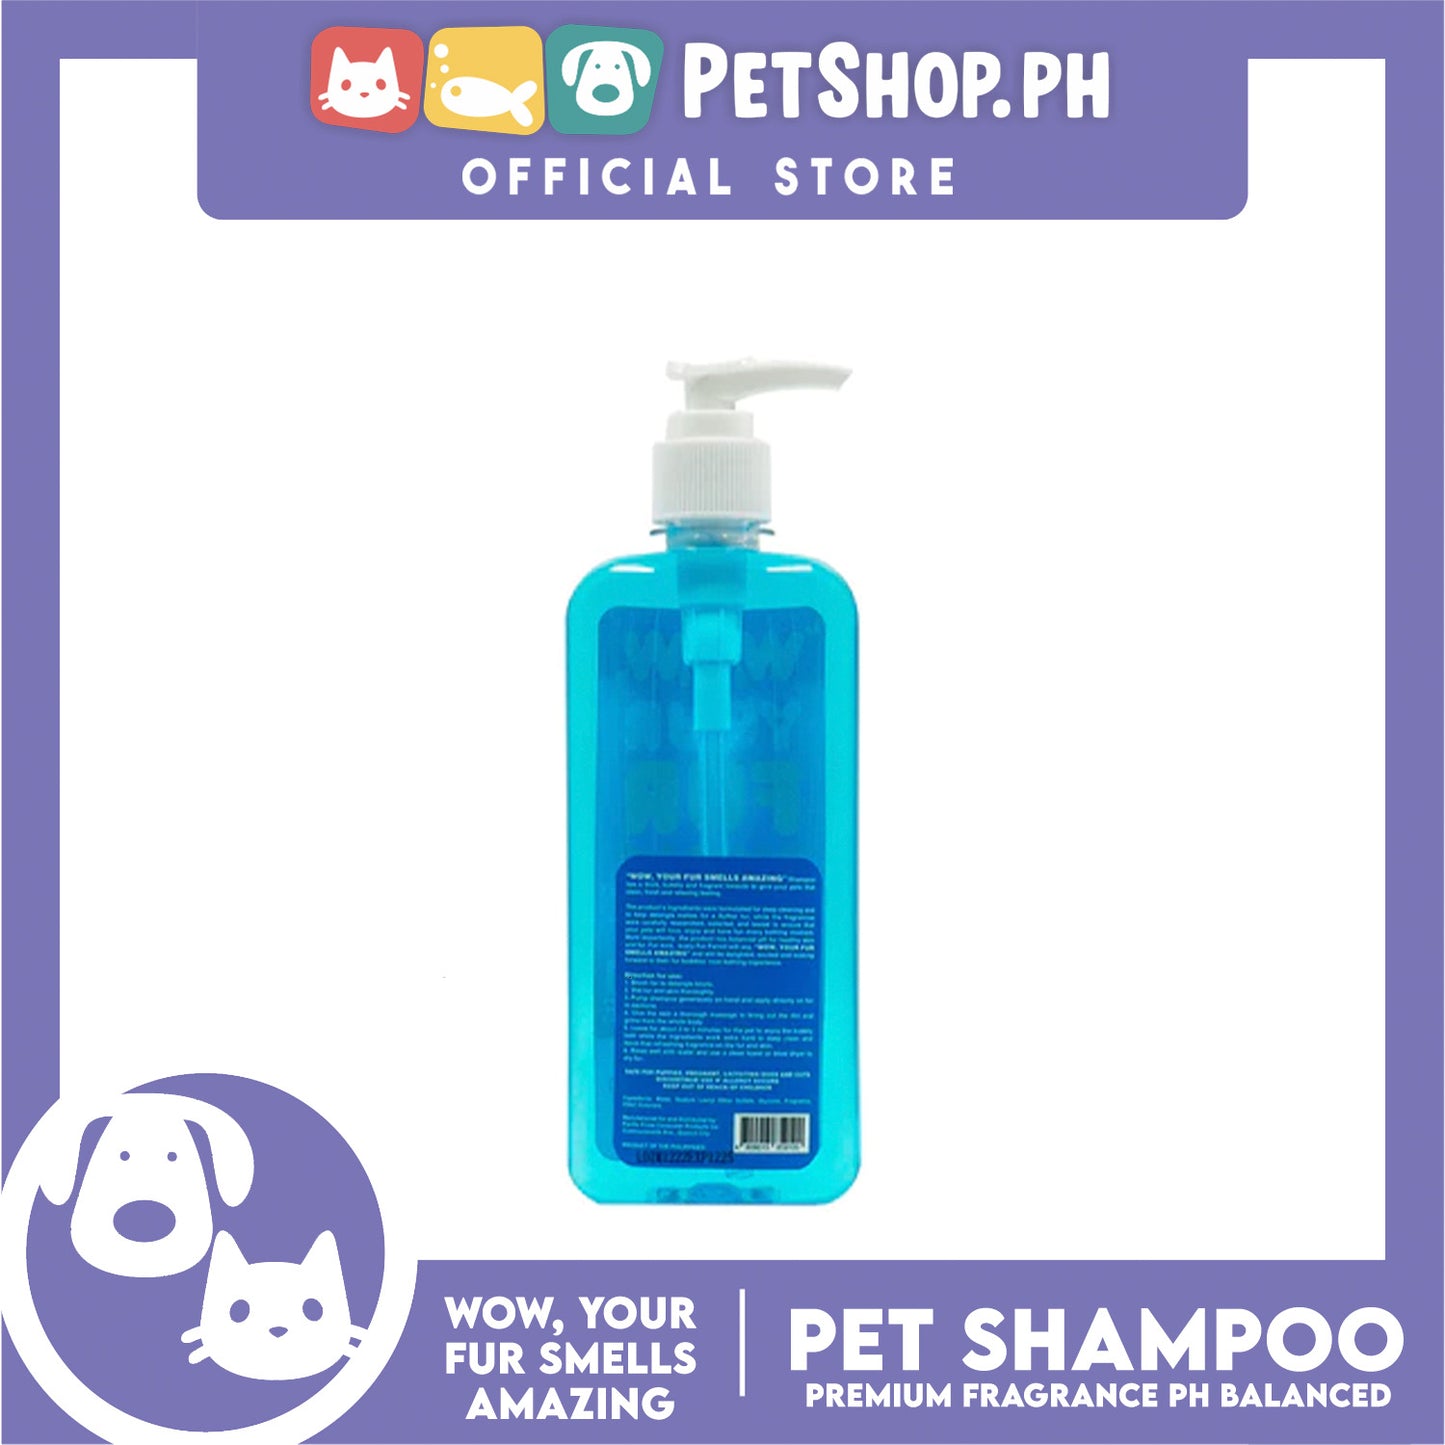 Wow, Your Fur Smells Amazing, Premium Fragrance pH Balanced Pet Shampoo 250ml (Fluffy Love)